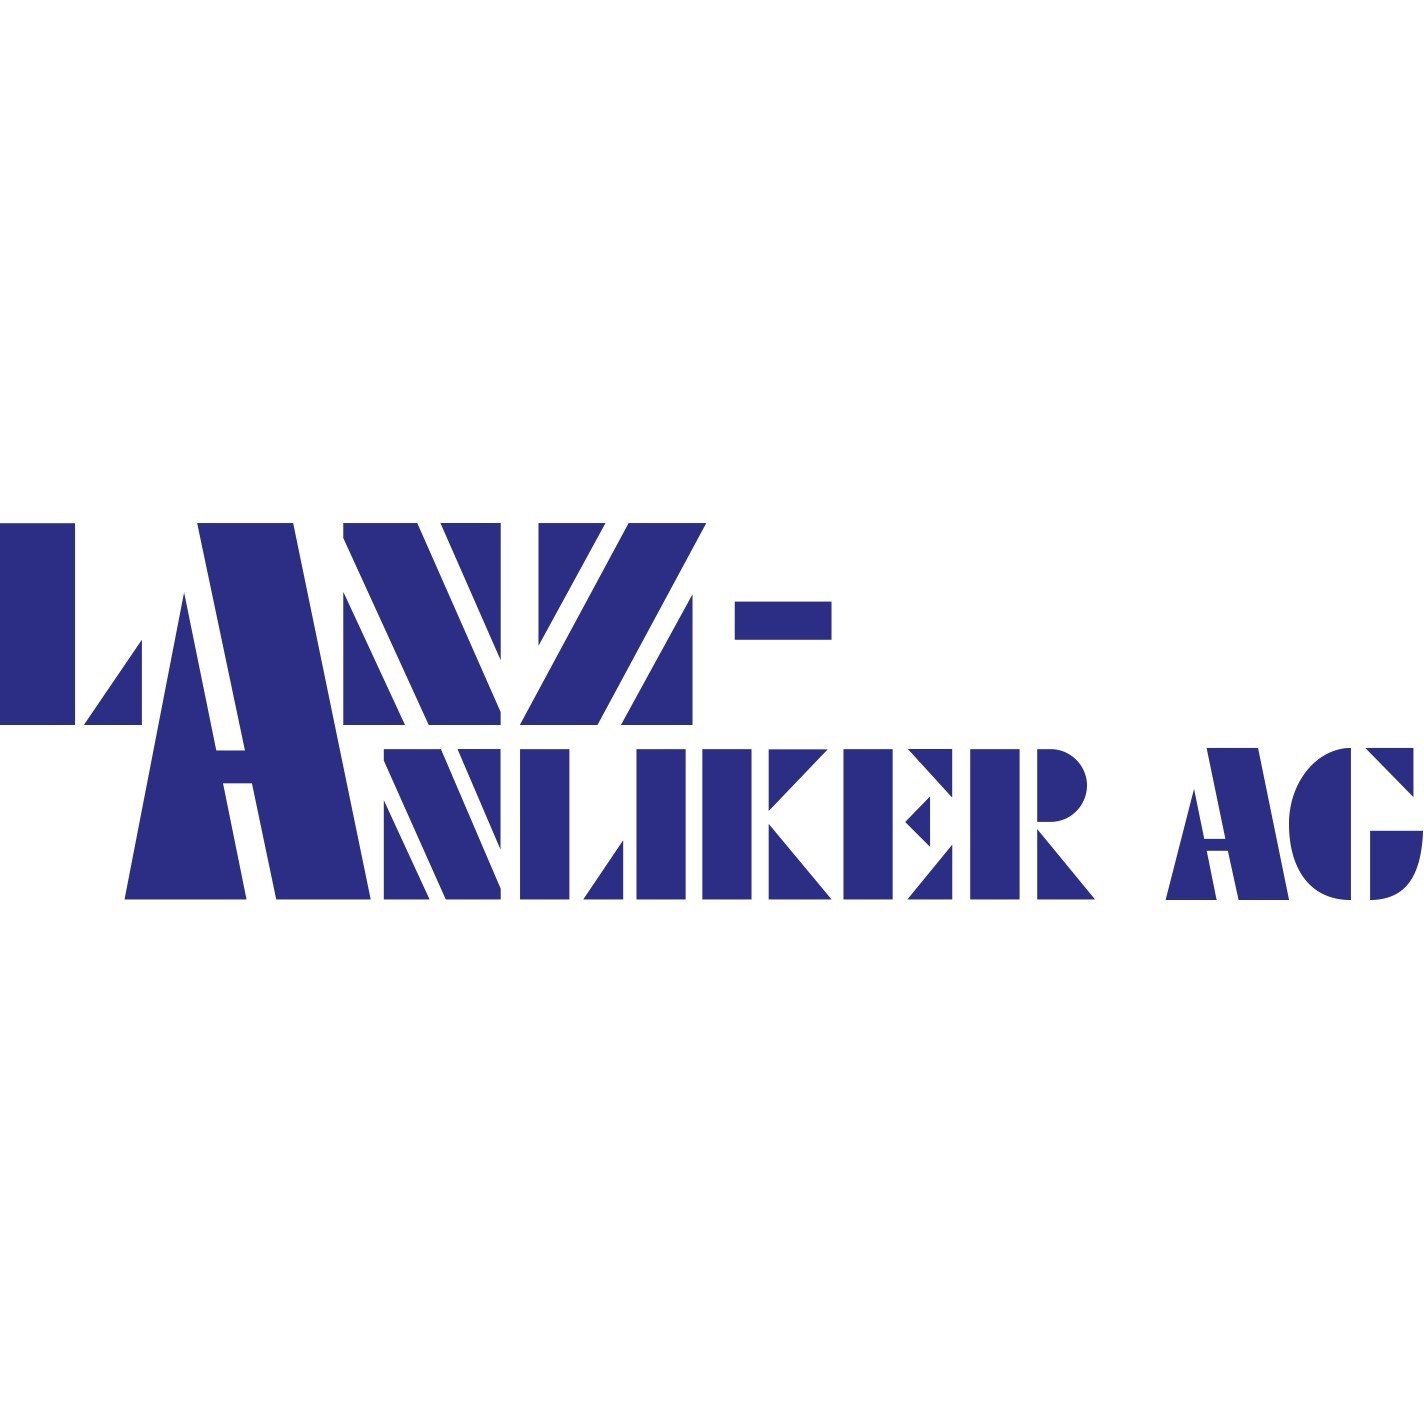 Lanz-Anliker AG Logo